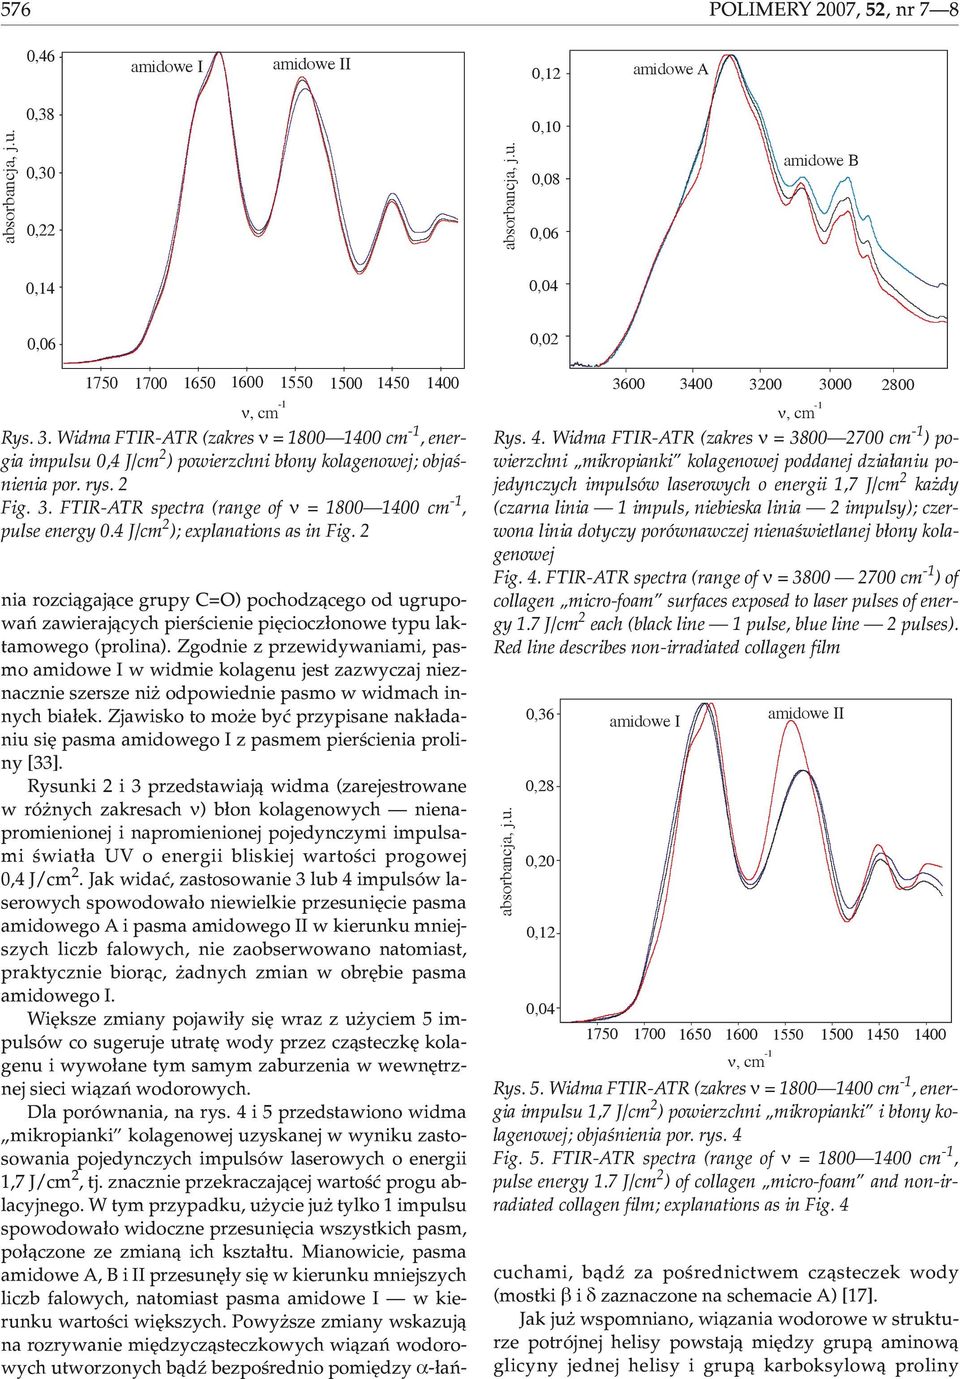 FTIR-ATR spectra (range of ν = 1800 1400 cm -1, pulse energy 0.4 J/cm 2 ); explanations as in Fig. 2 3600 3400 3200 3000 2800 ν, cm -1 Rys. 4.